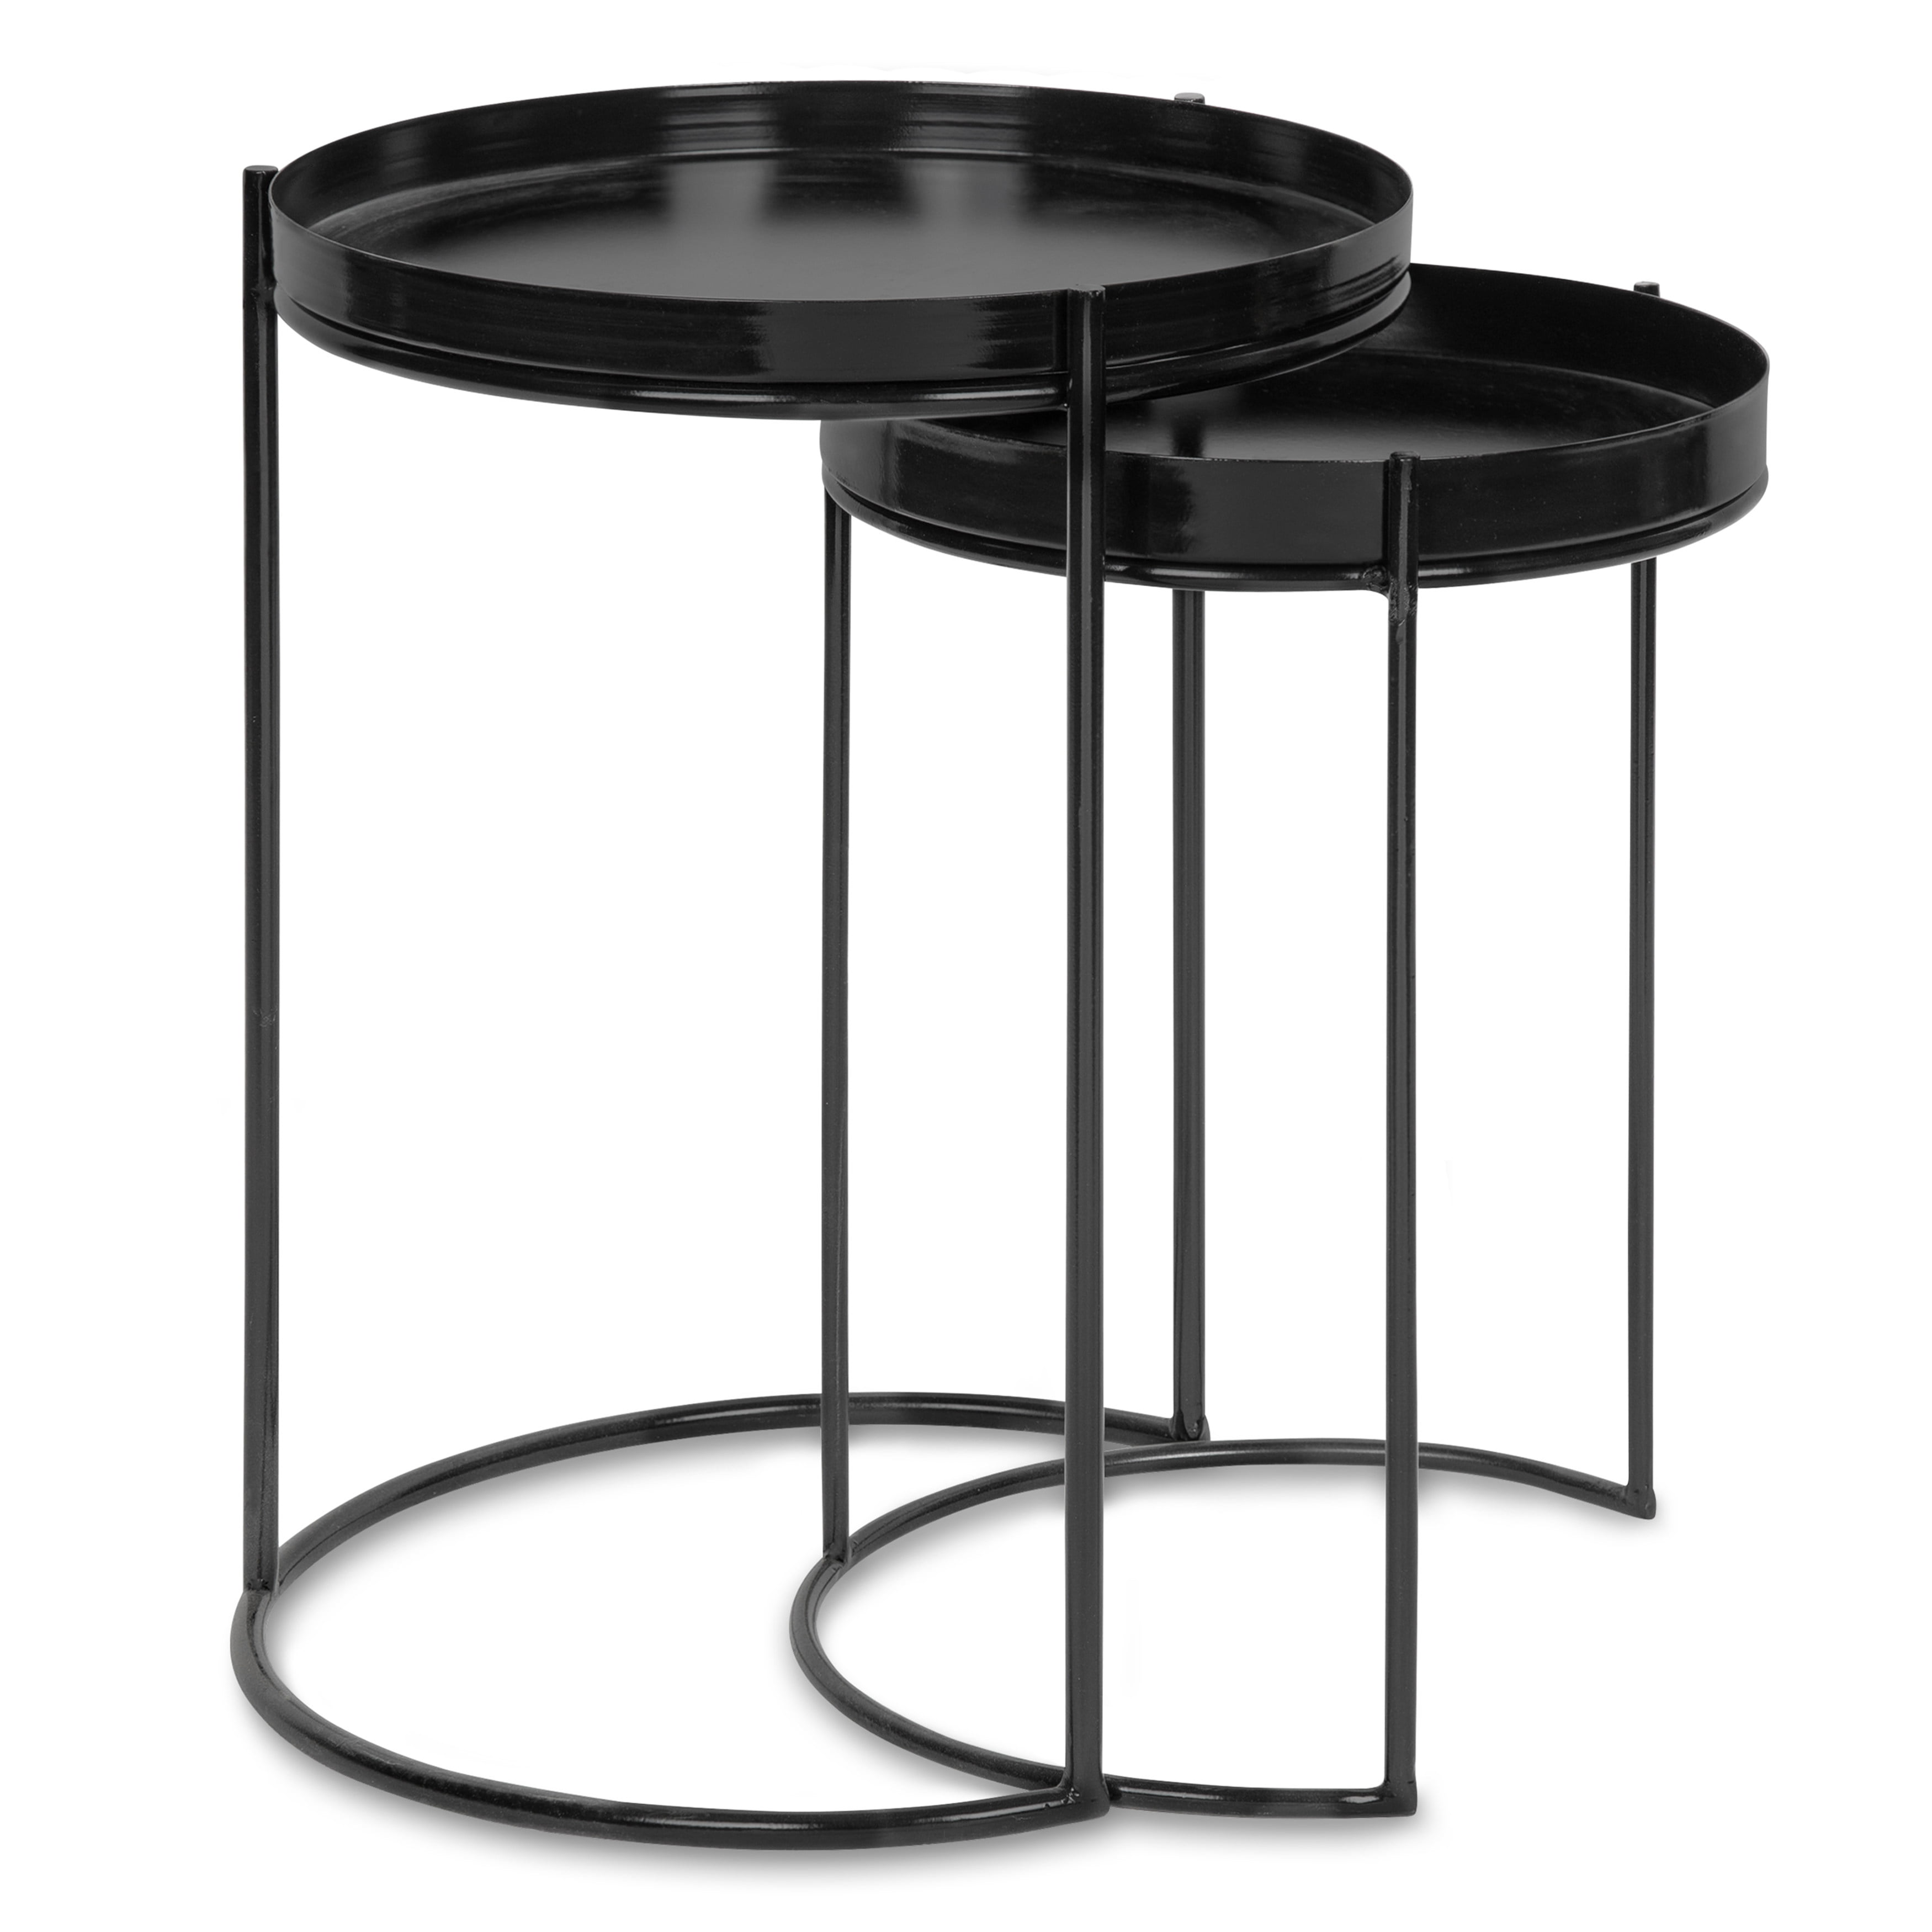 Kate and Laurel Presti Modern Nesting Table Set, Set of 2, Black, Space  Saving Modern Design